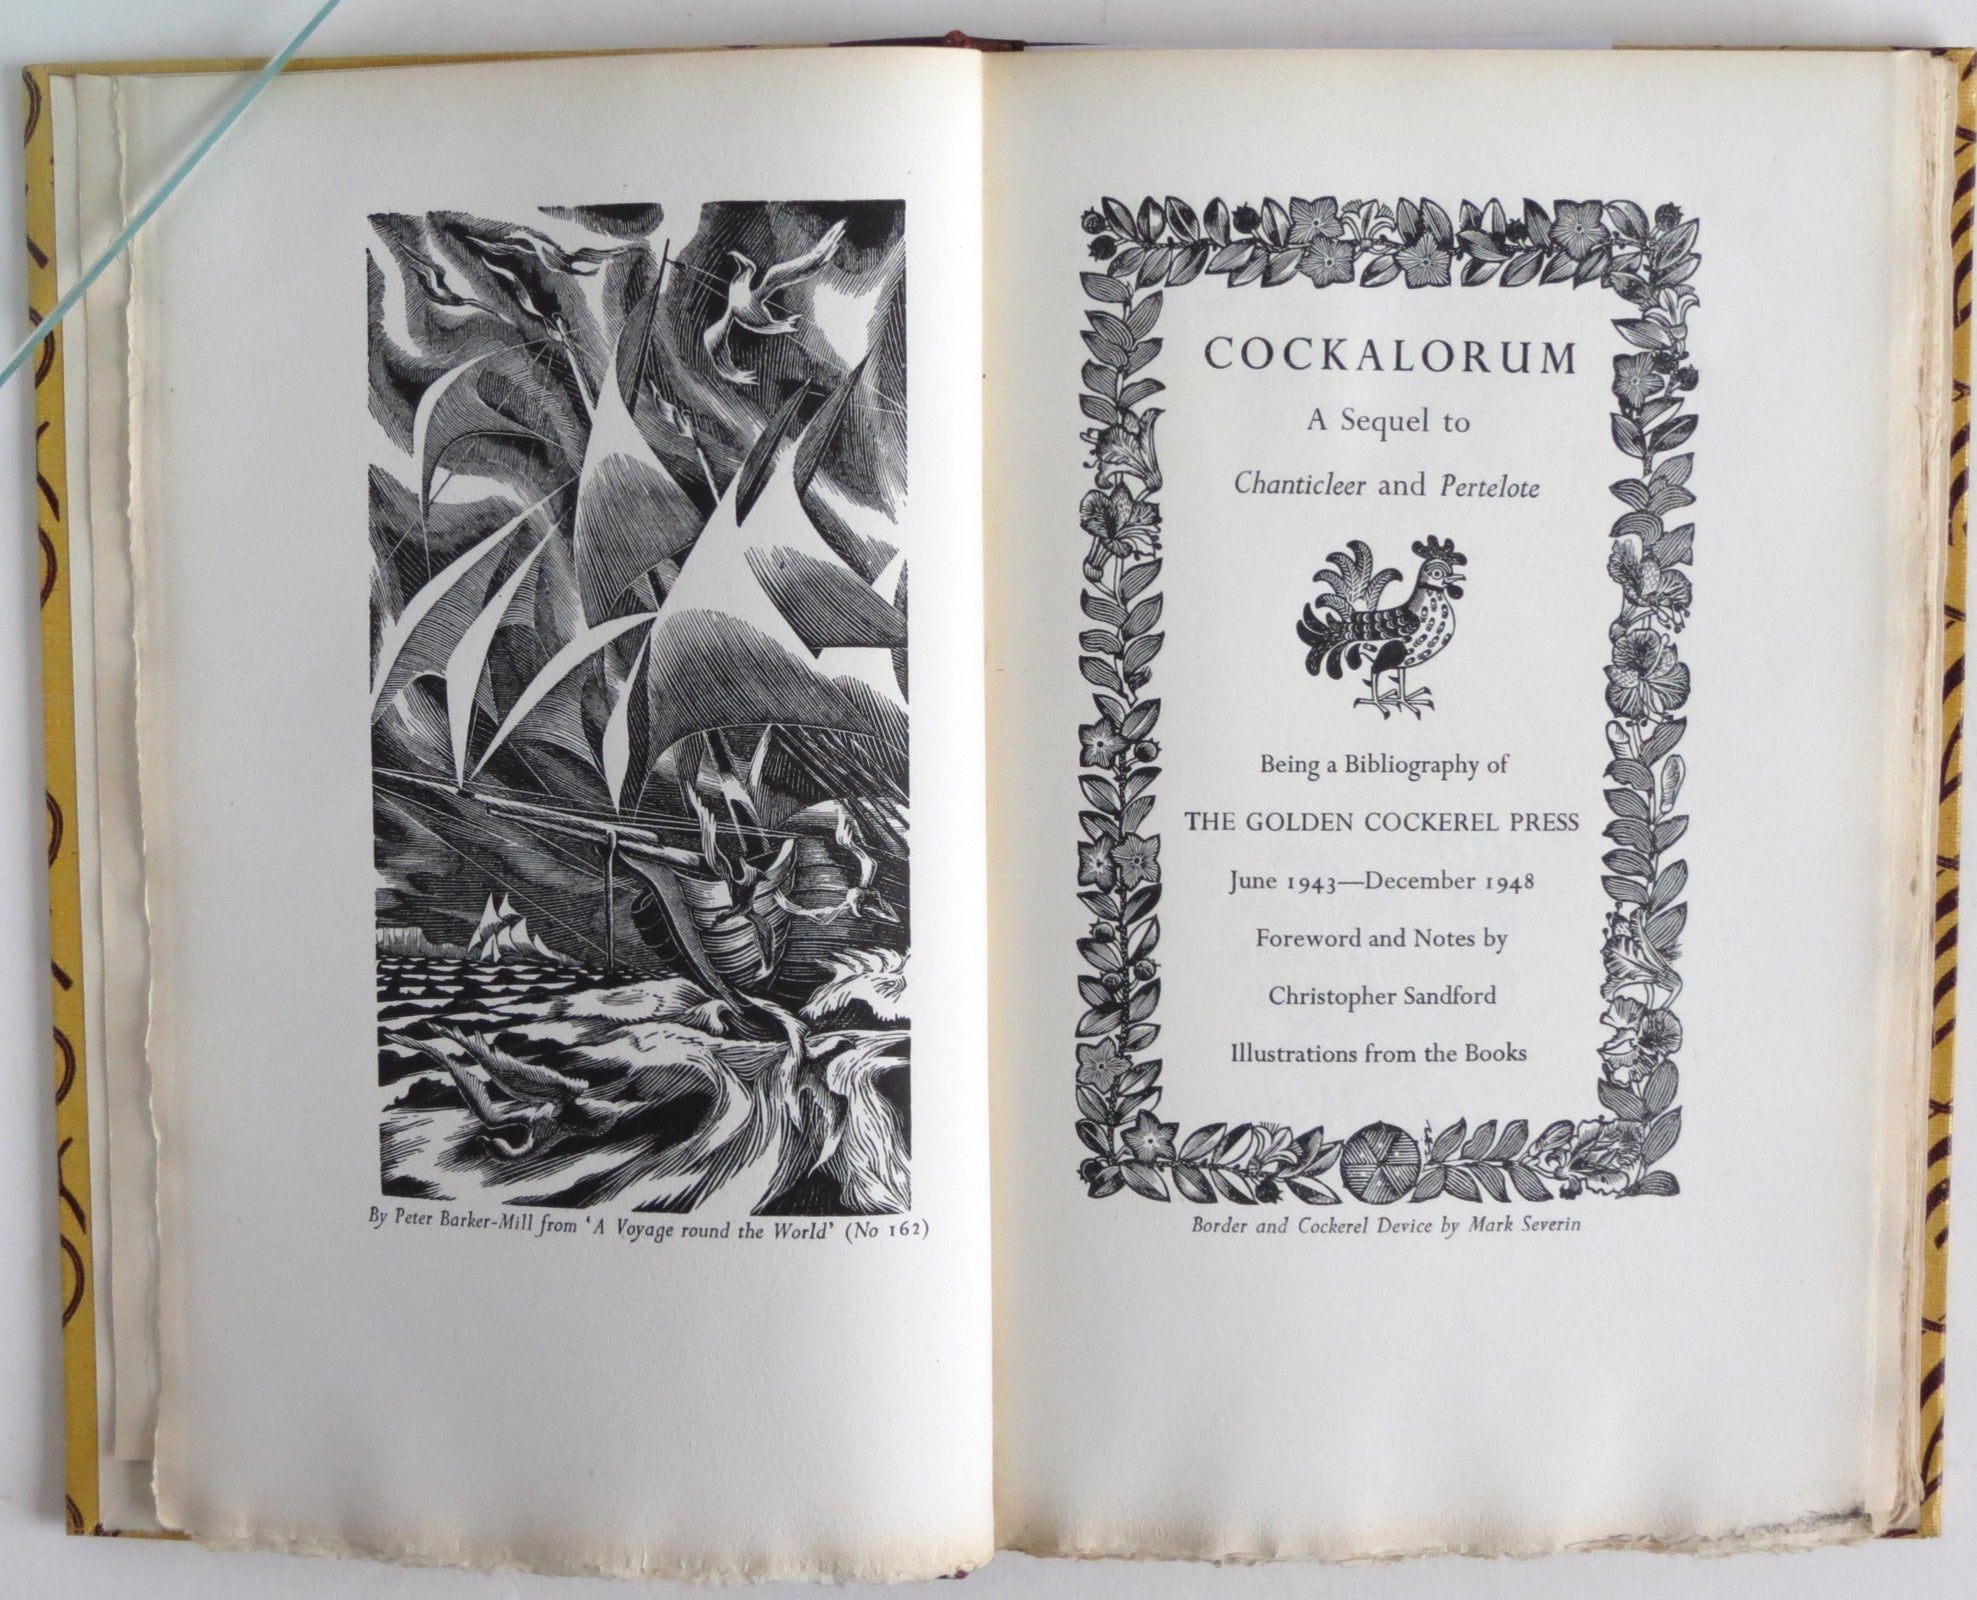 COCKALORUM. A Bibliography of the Golden Cockerel Press June 1943-December 1949. With 83 illustrations.